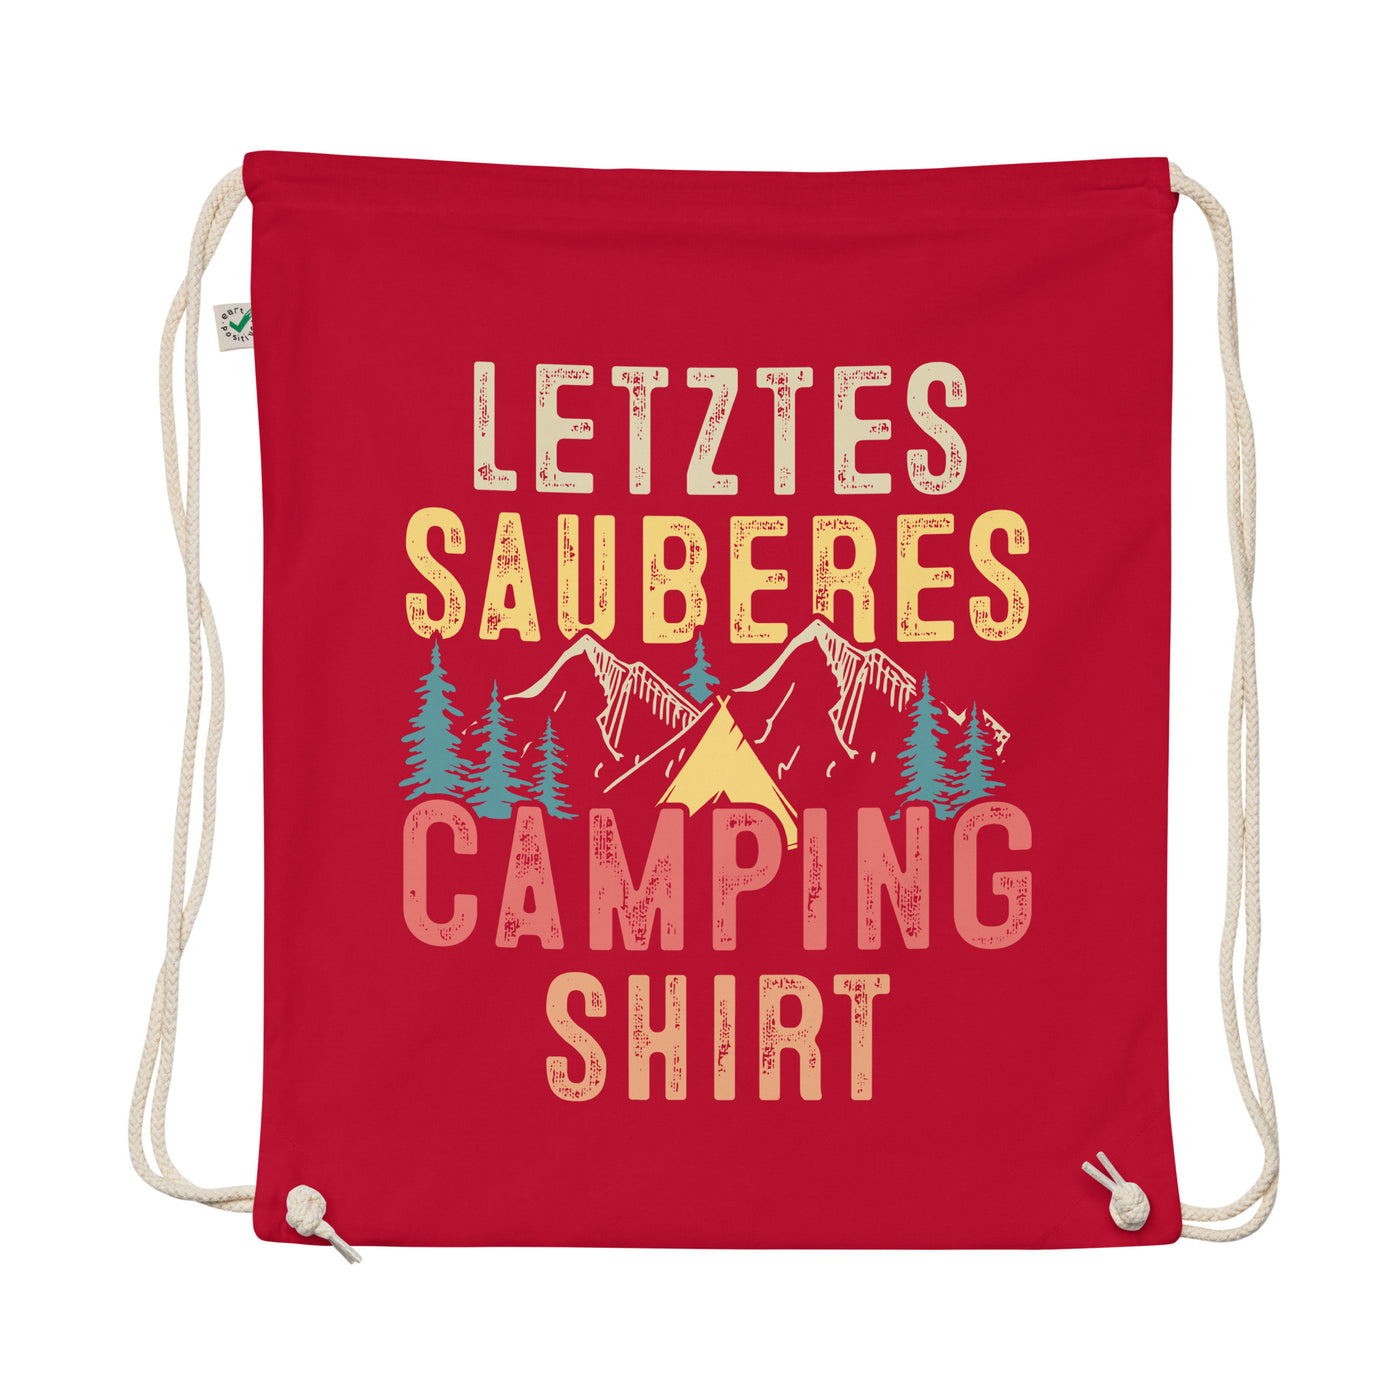 Letztes Sauberes Camping Shirt - Organic Turnbeutel camping